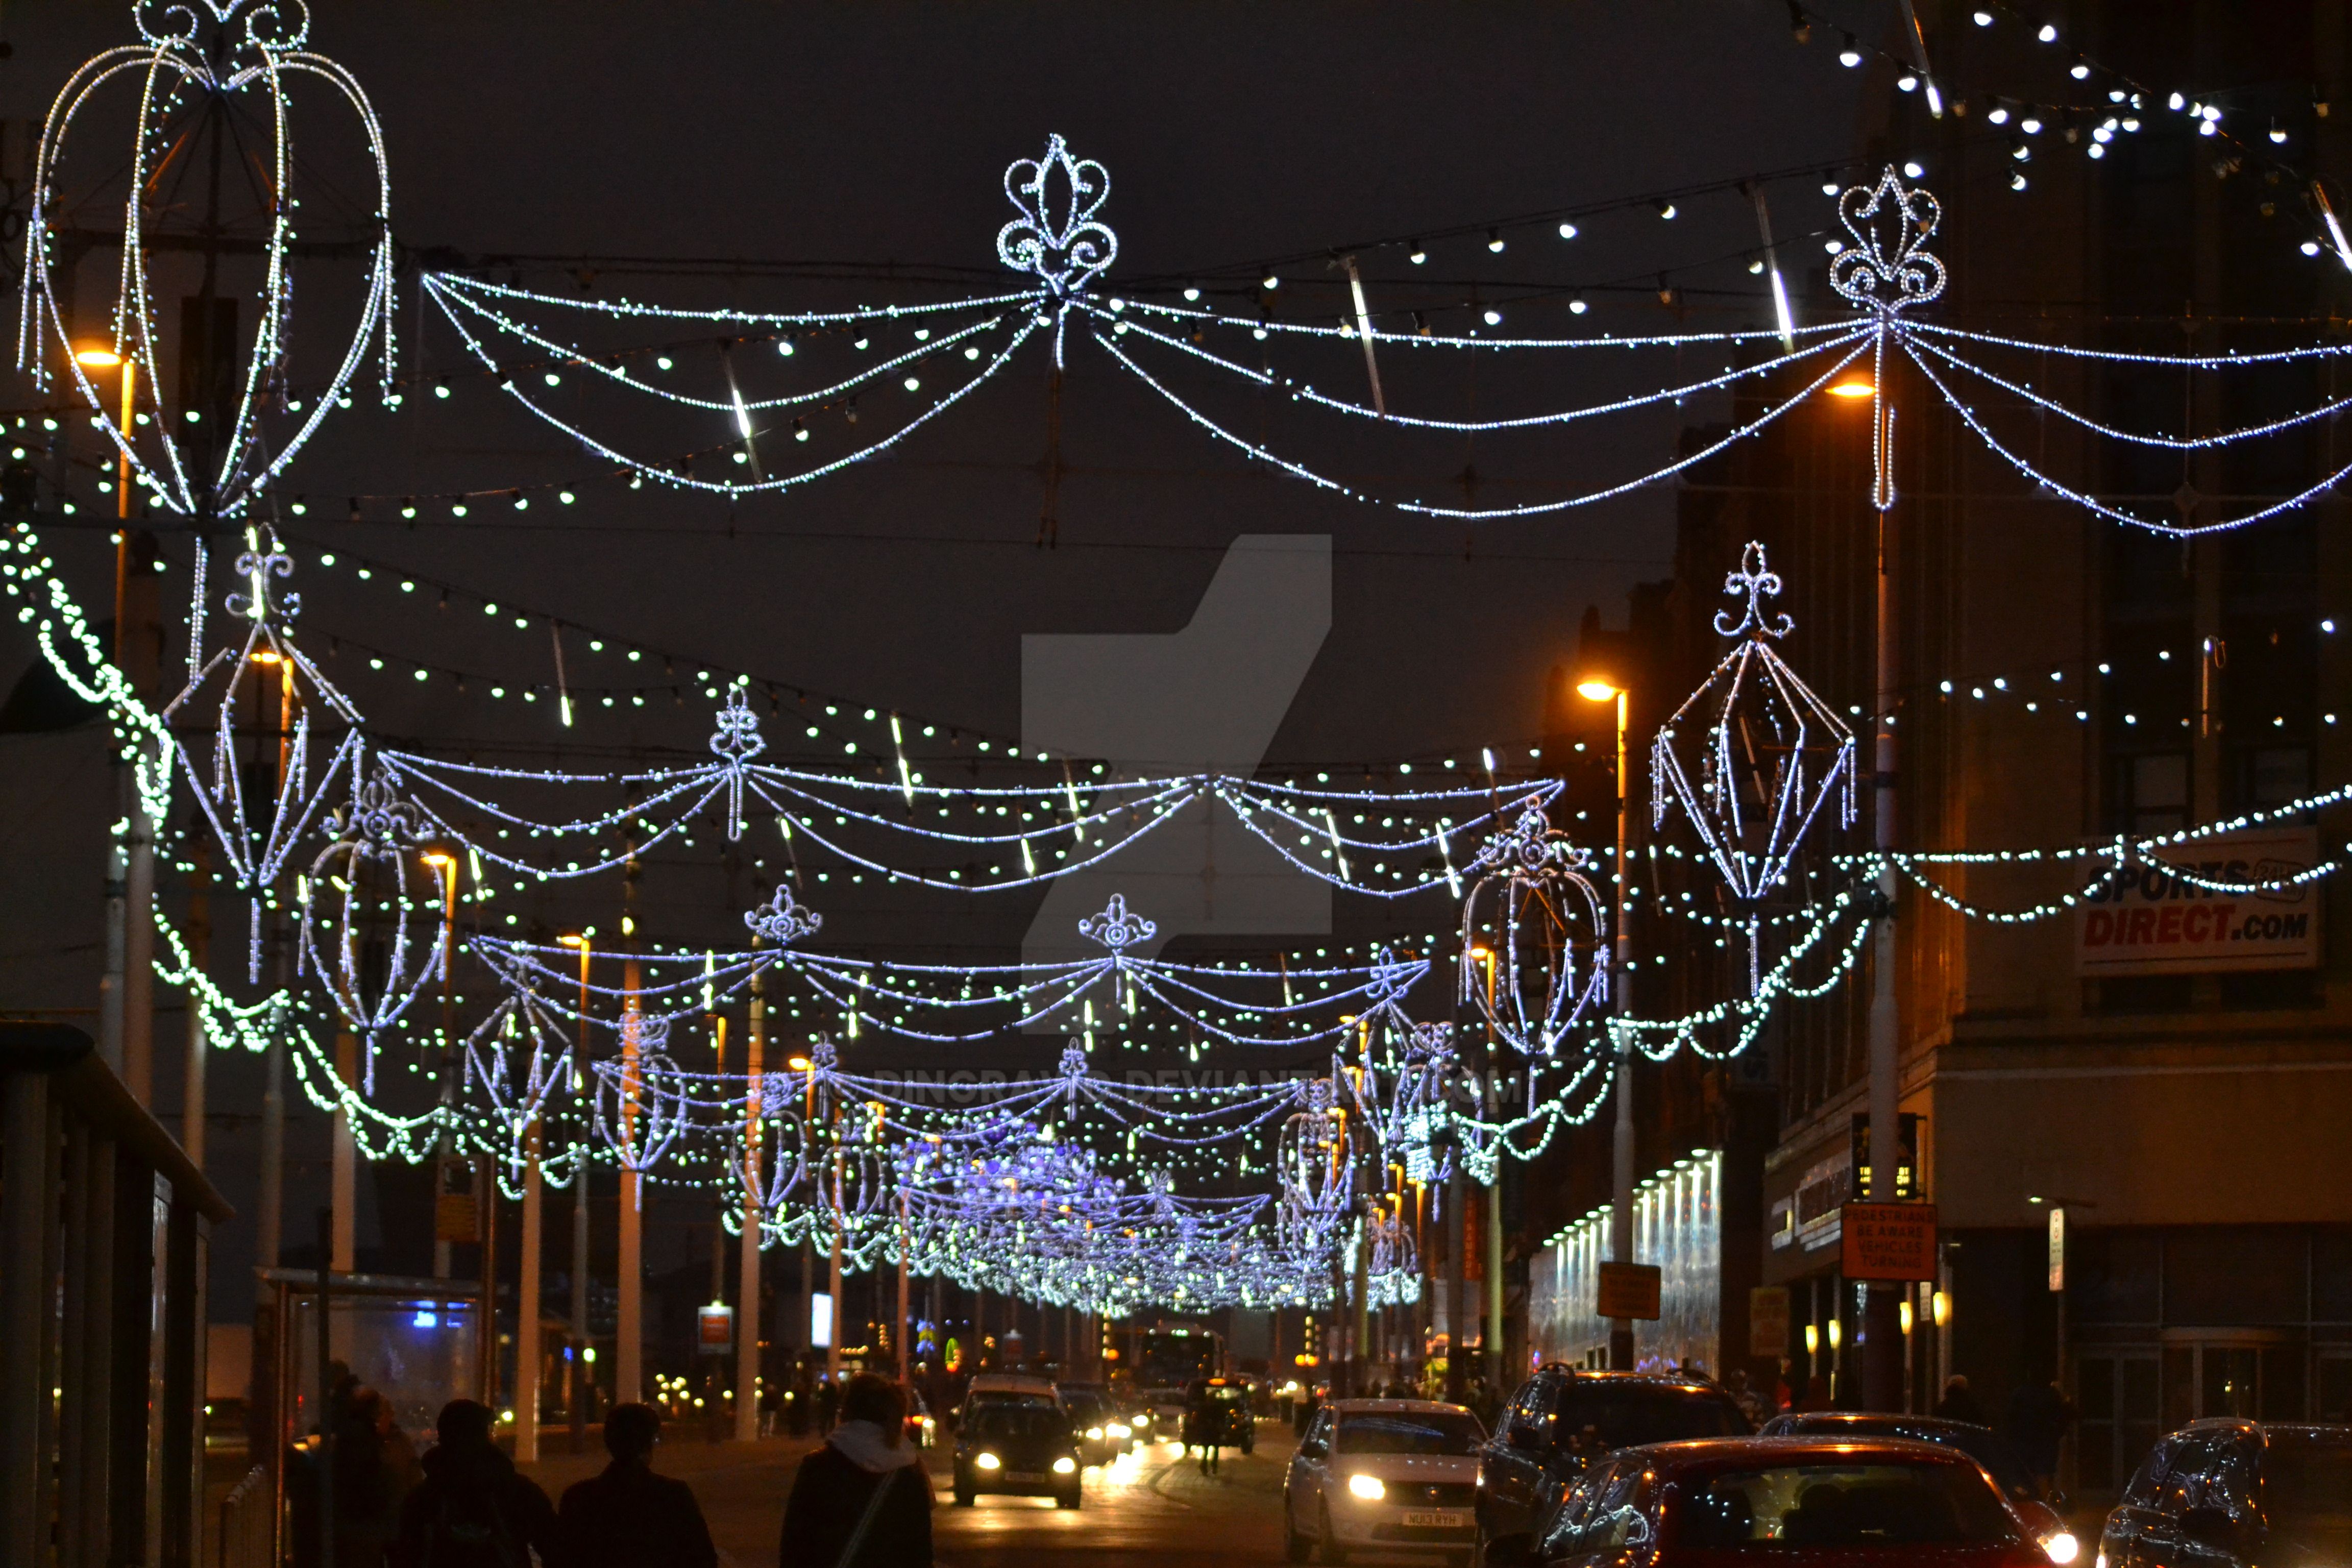 Blackpool Illuminations [1] by DingRawD on DeviantArt